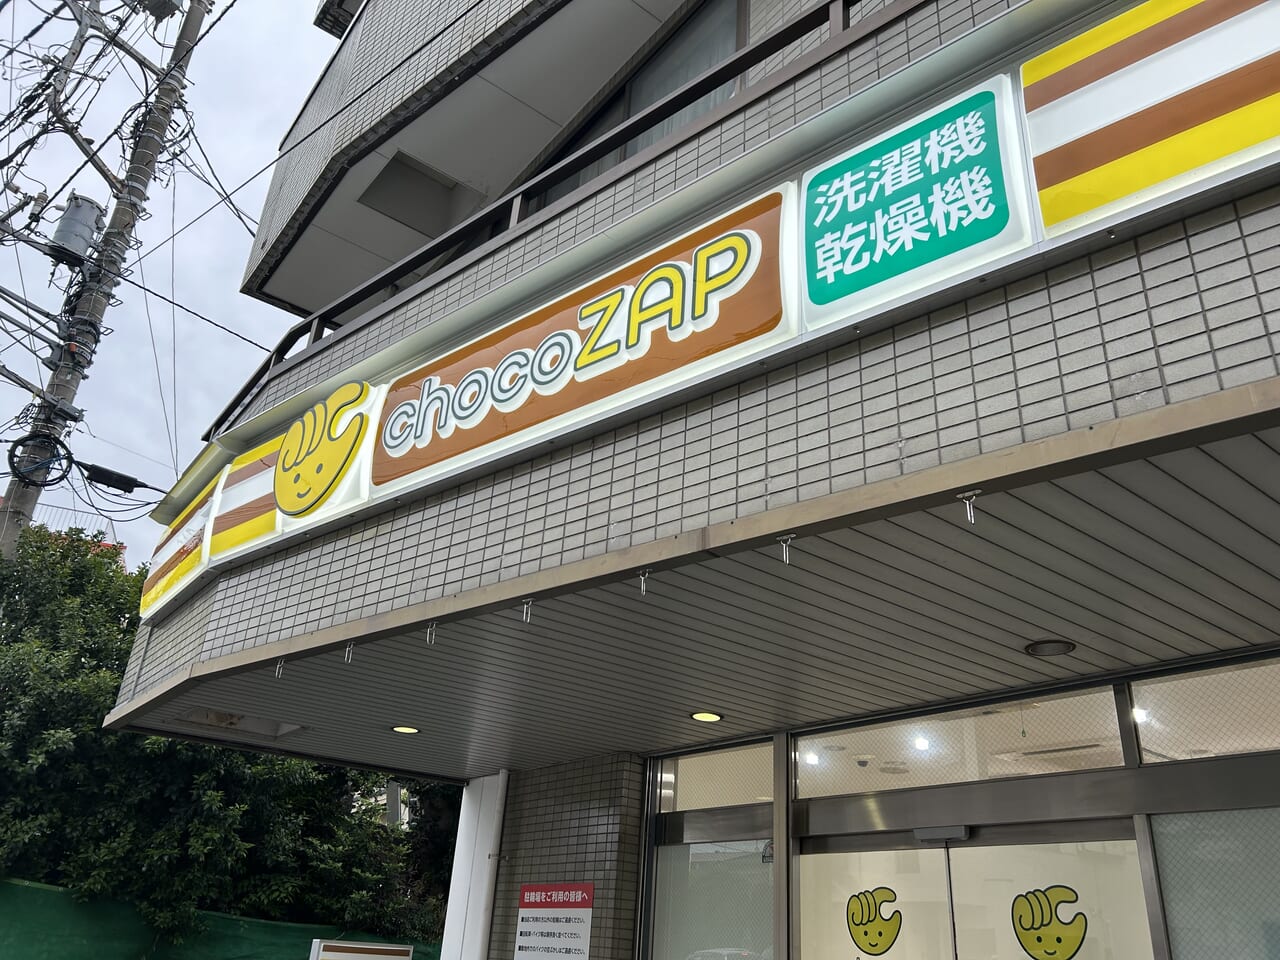 chocoZAP 大和桜ヶ丘店